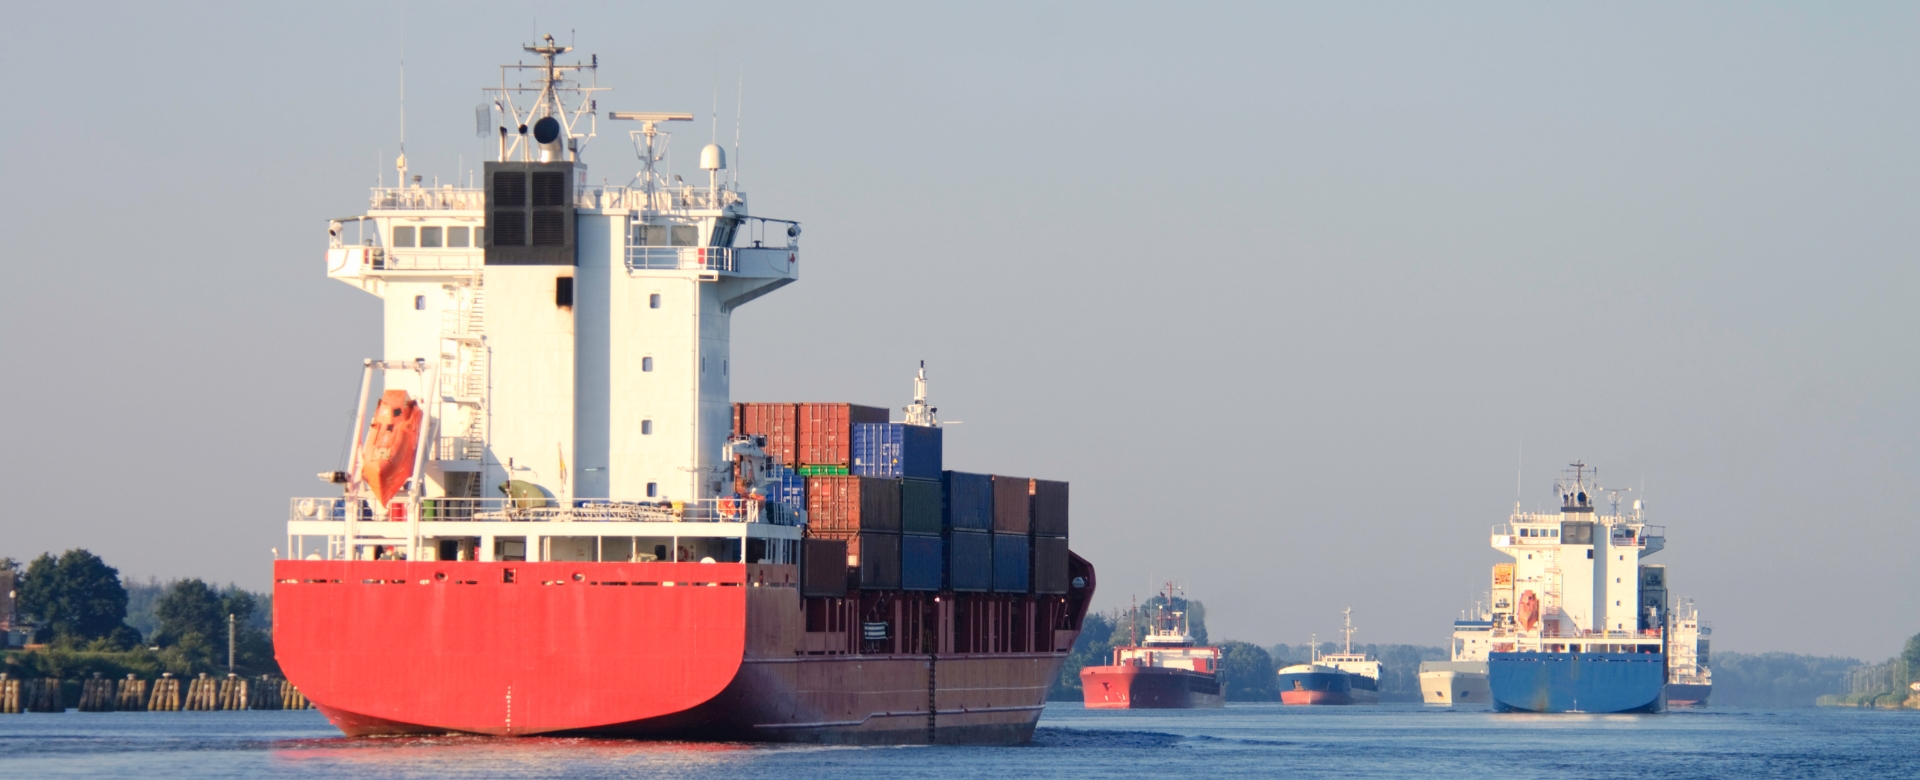 Systemy transportowe – Infrastruktura transportu morskiego